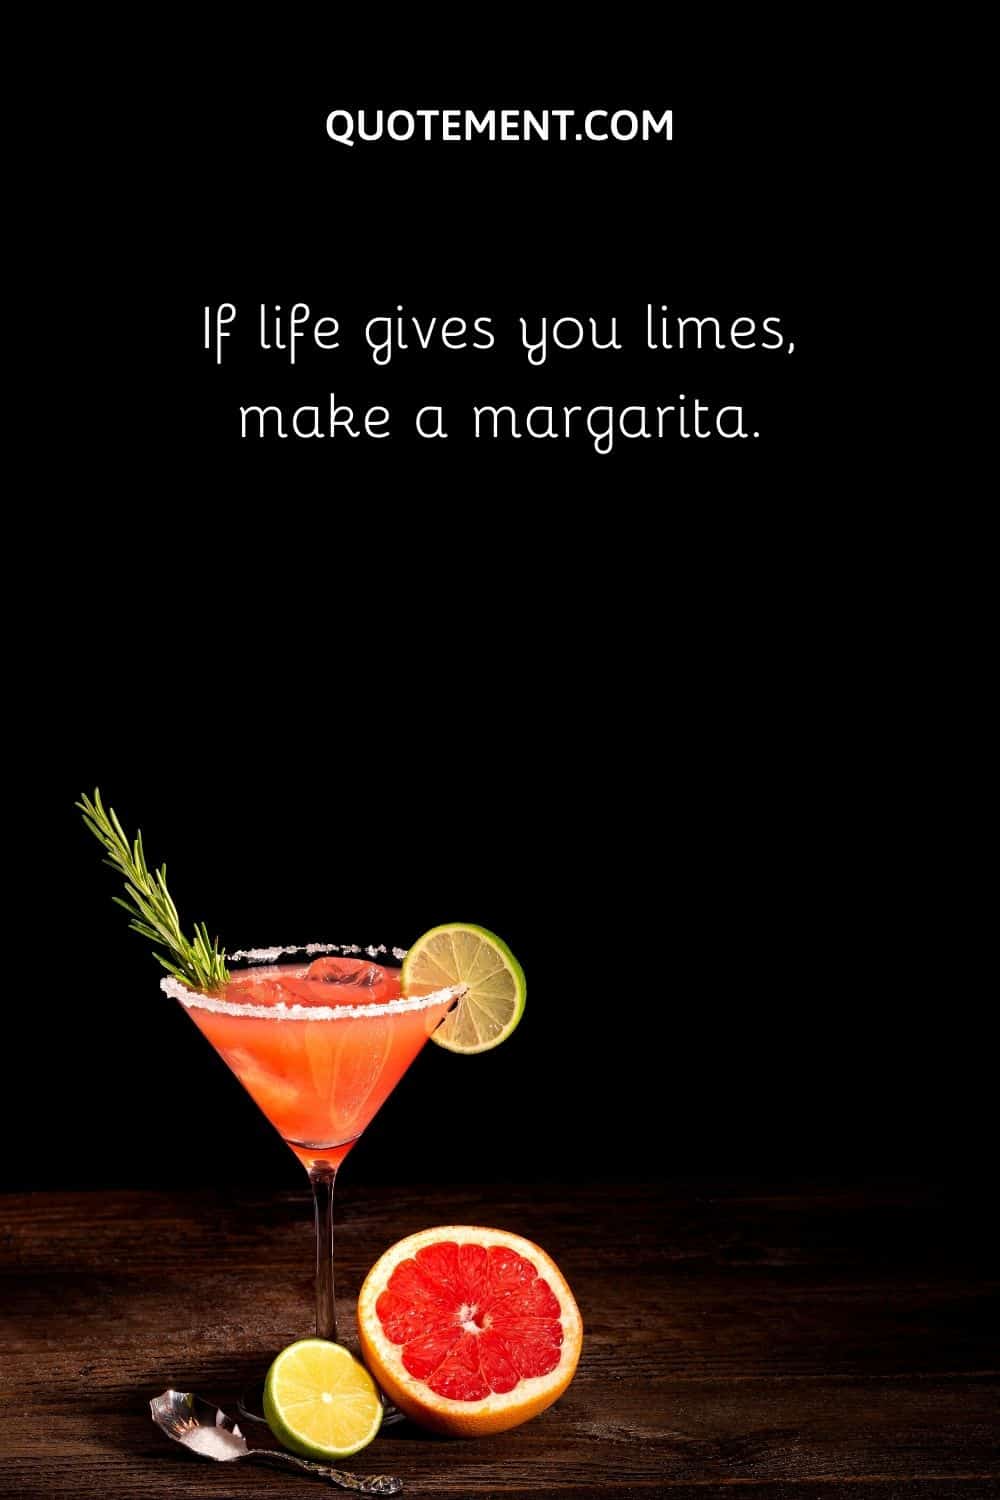 If life gives you limes, make a margarita.